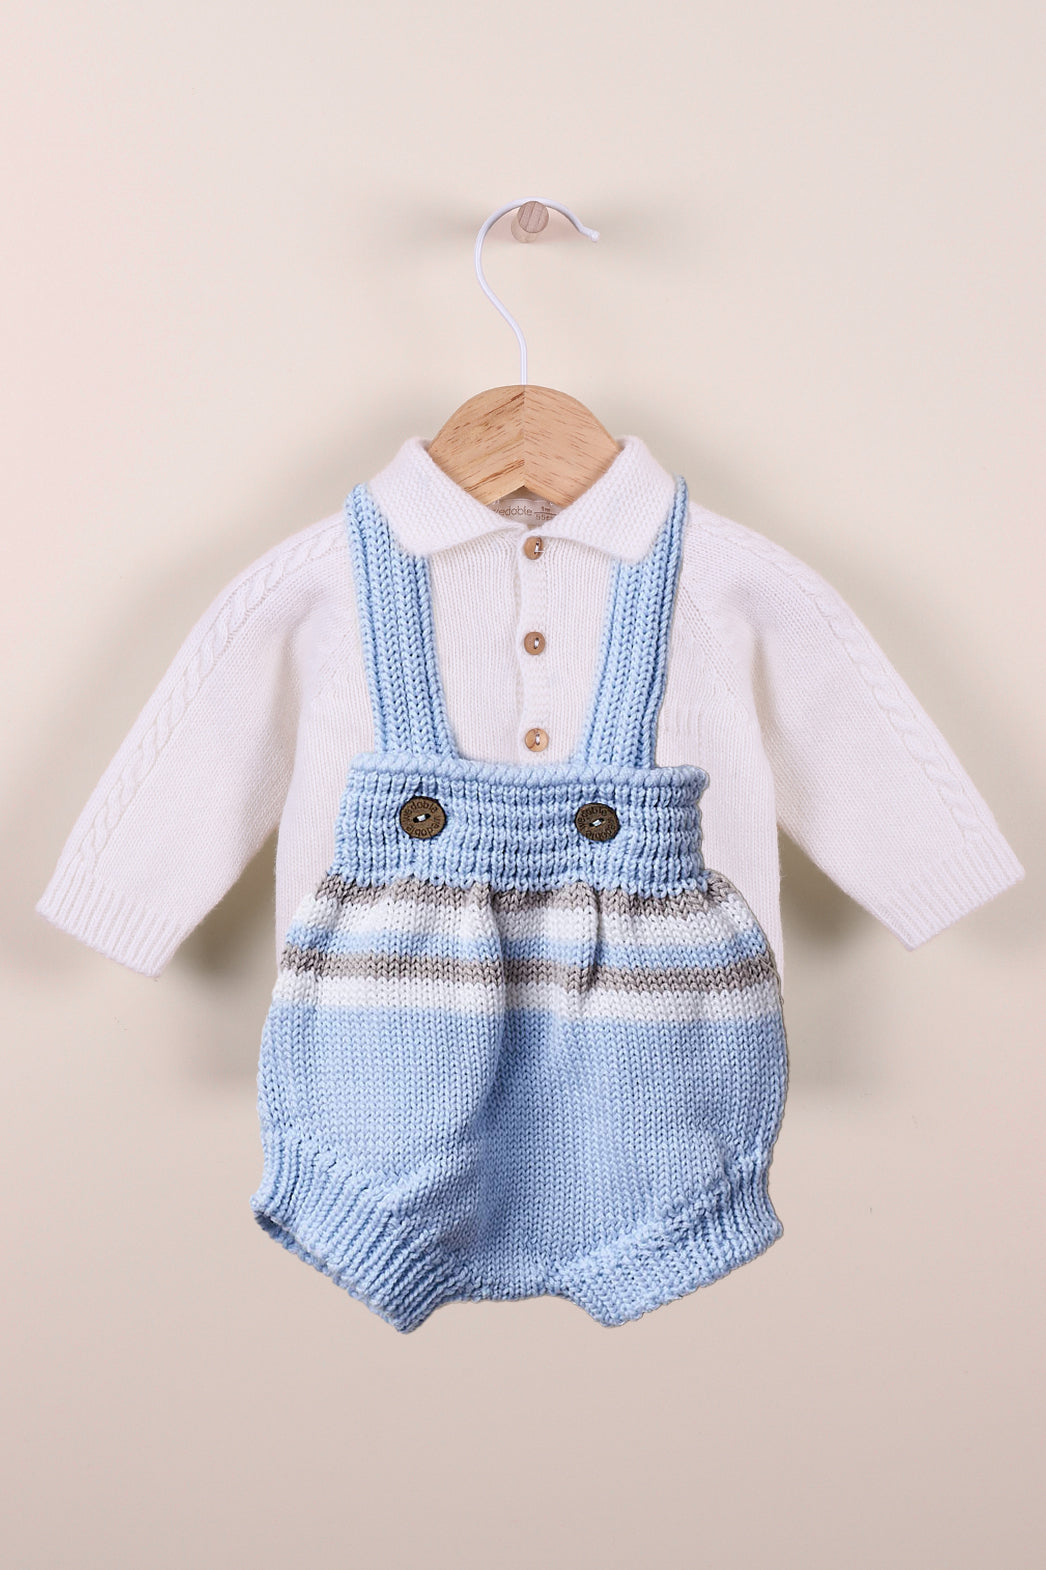 Wedoble "Celestino" Knit Polo Shirt & Baby Blue Shortie | Millie and John